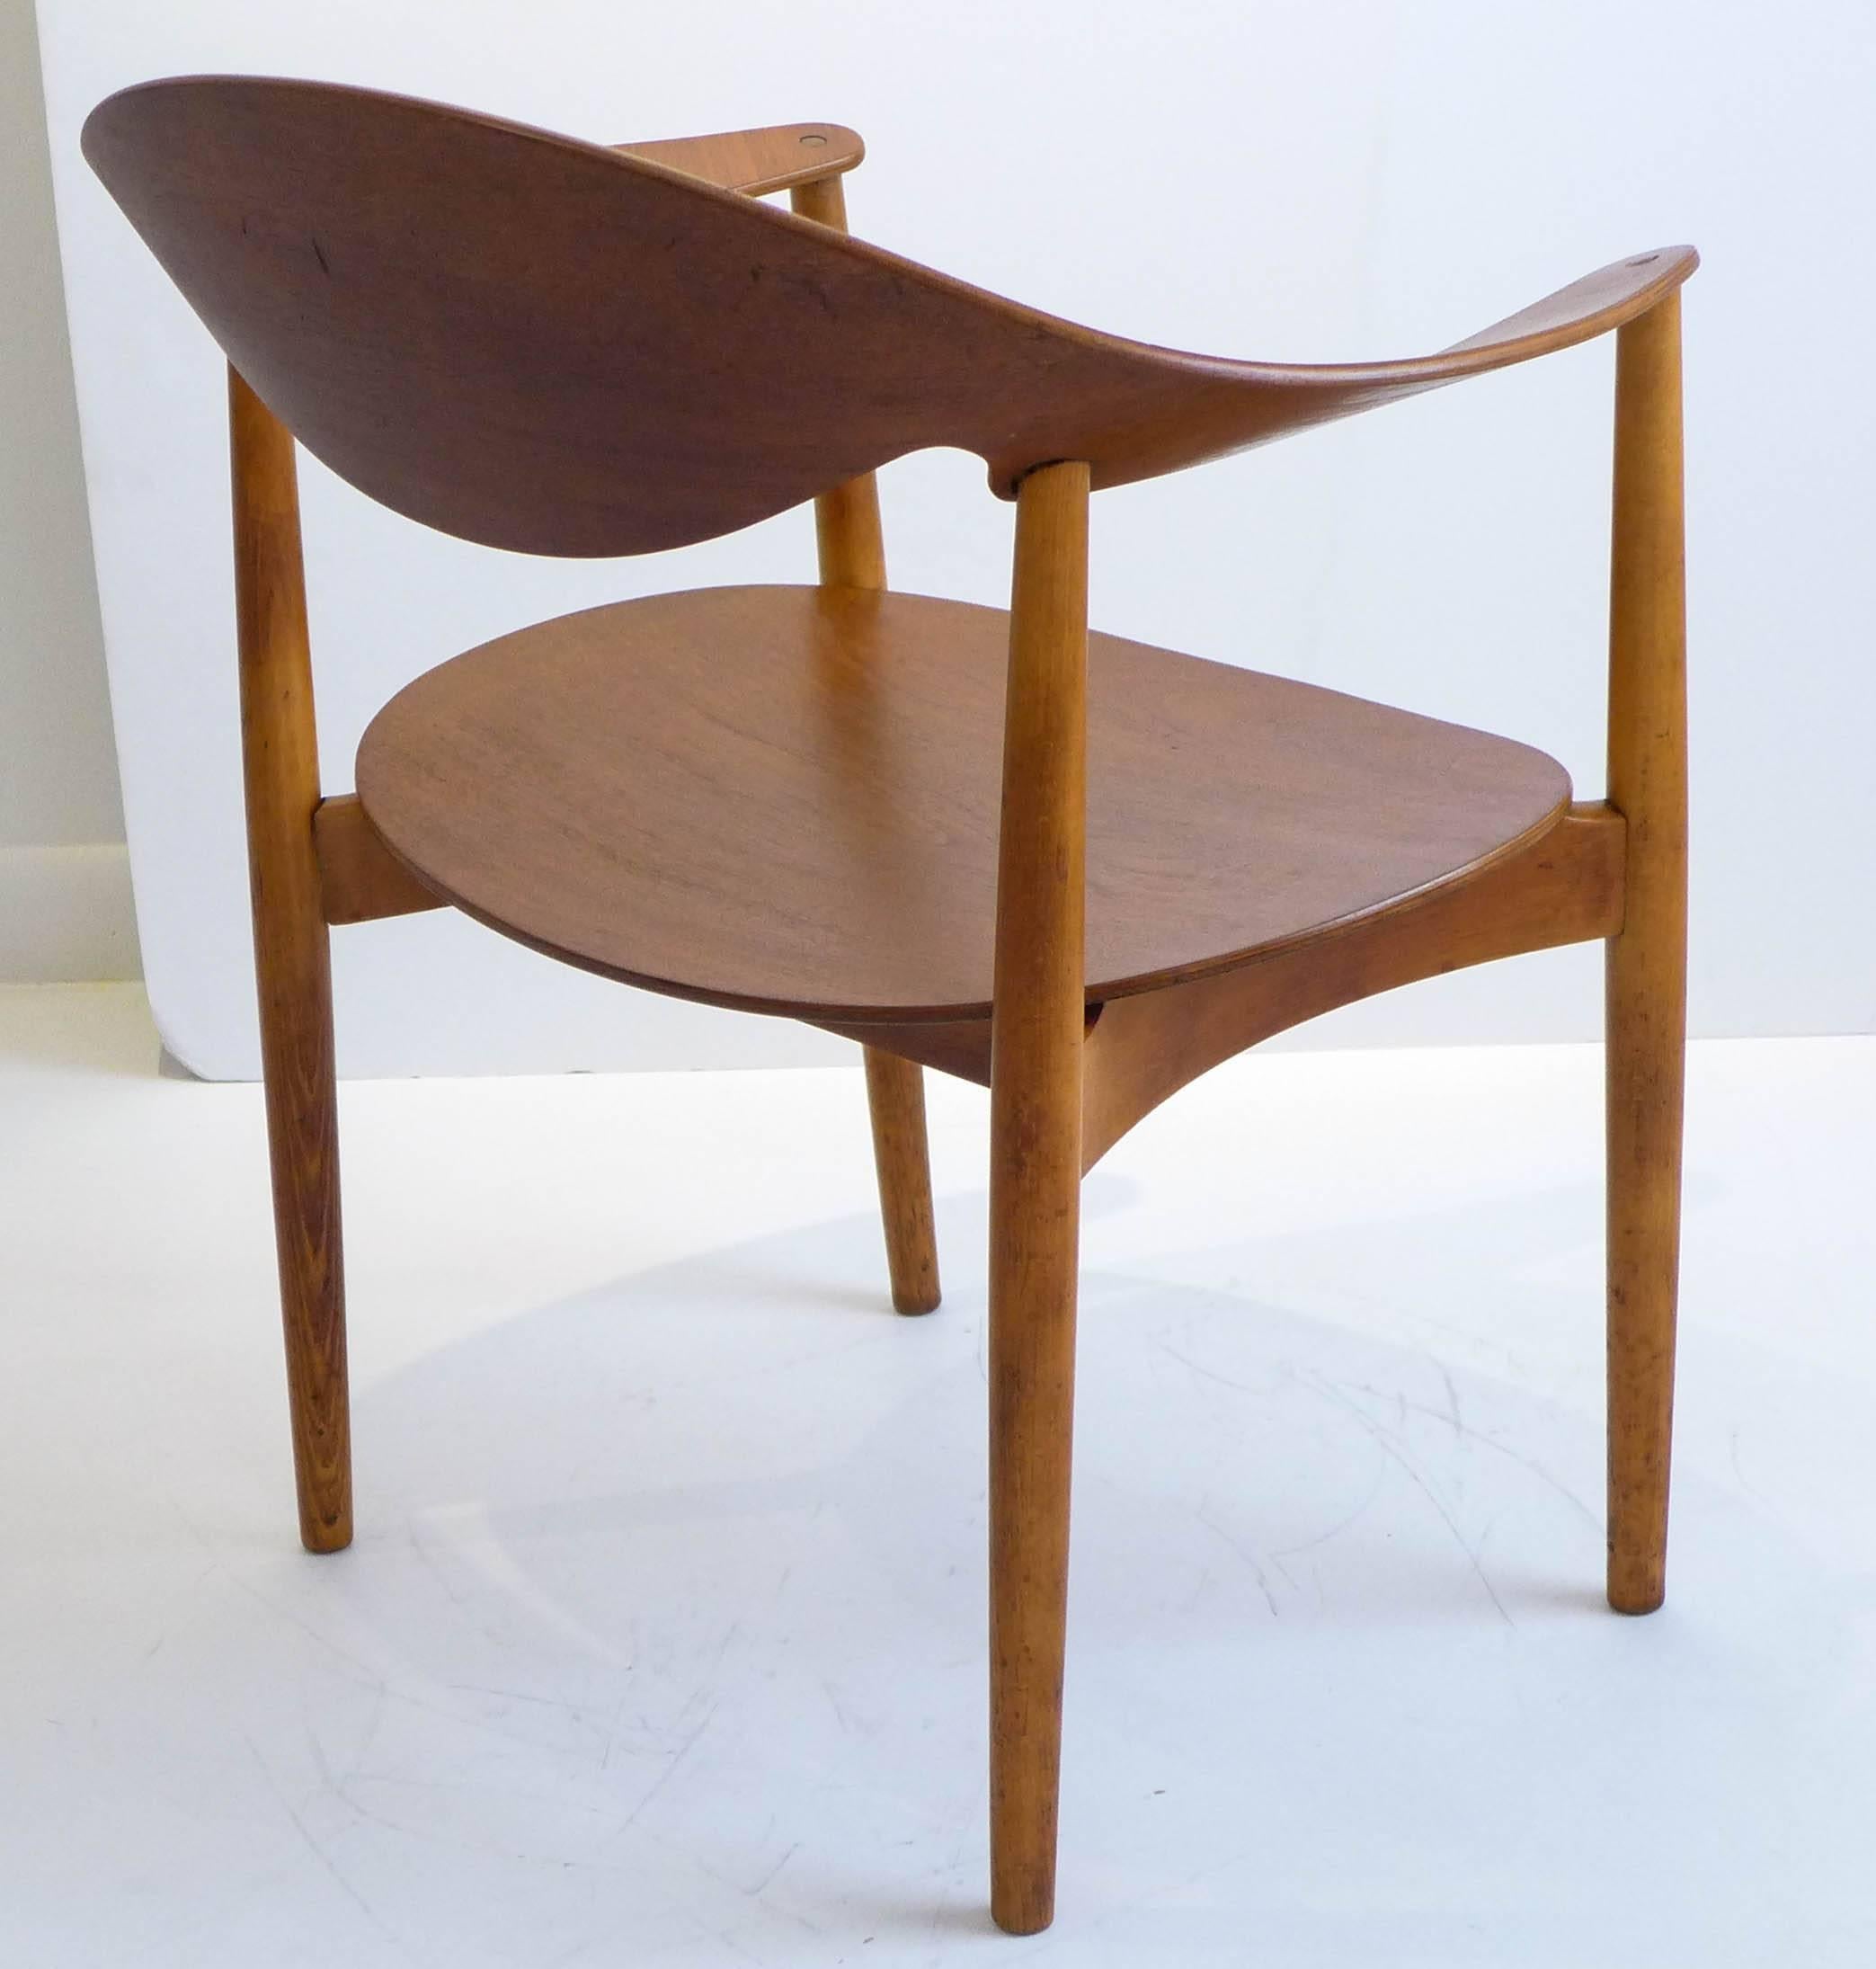 Metropolitan Chair by Madsen and Larsen (Skandinavische Moderne)